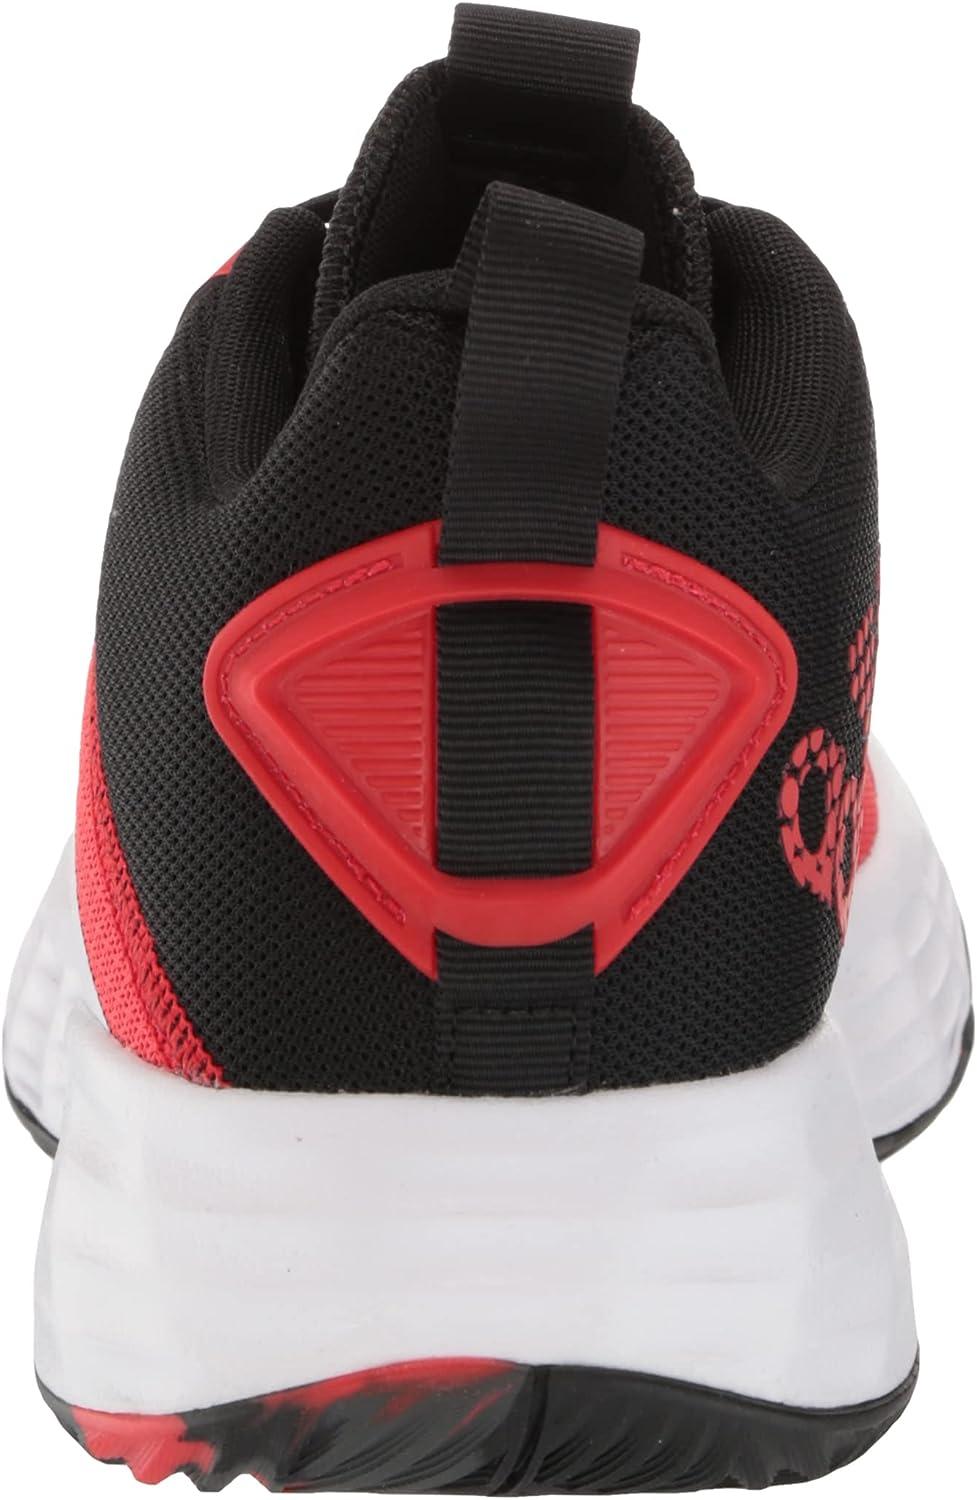 The Red/White/Core Black 9 Shoe Game adidas Basketball Own Men\'s Vivid